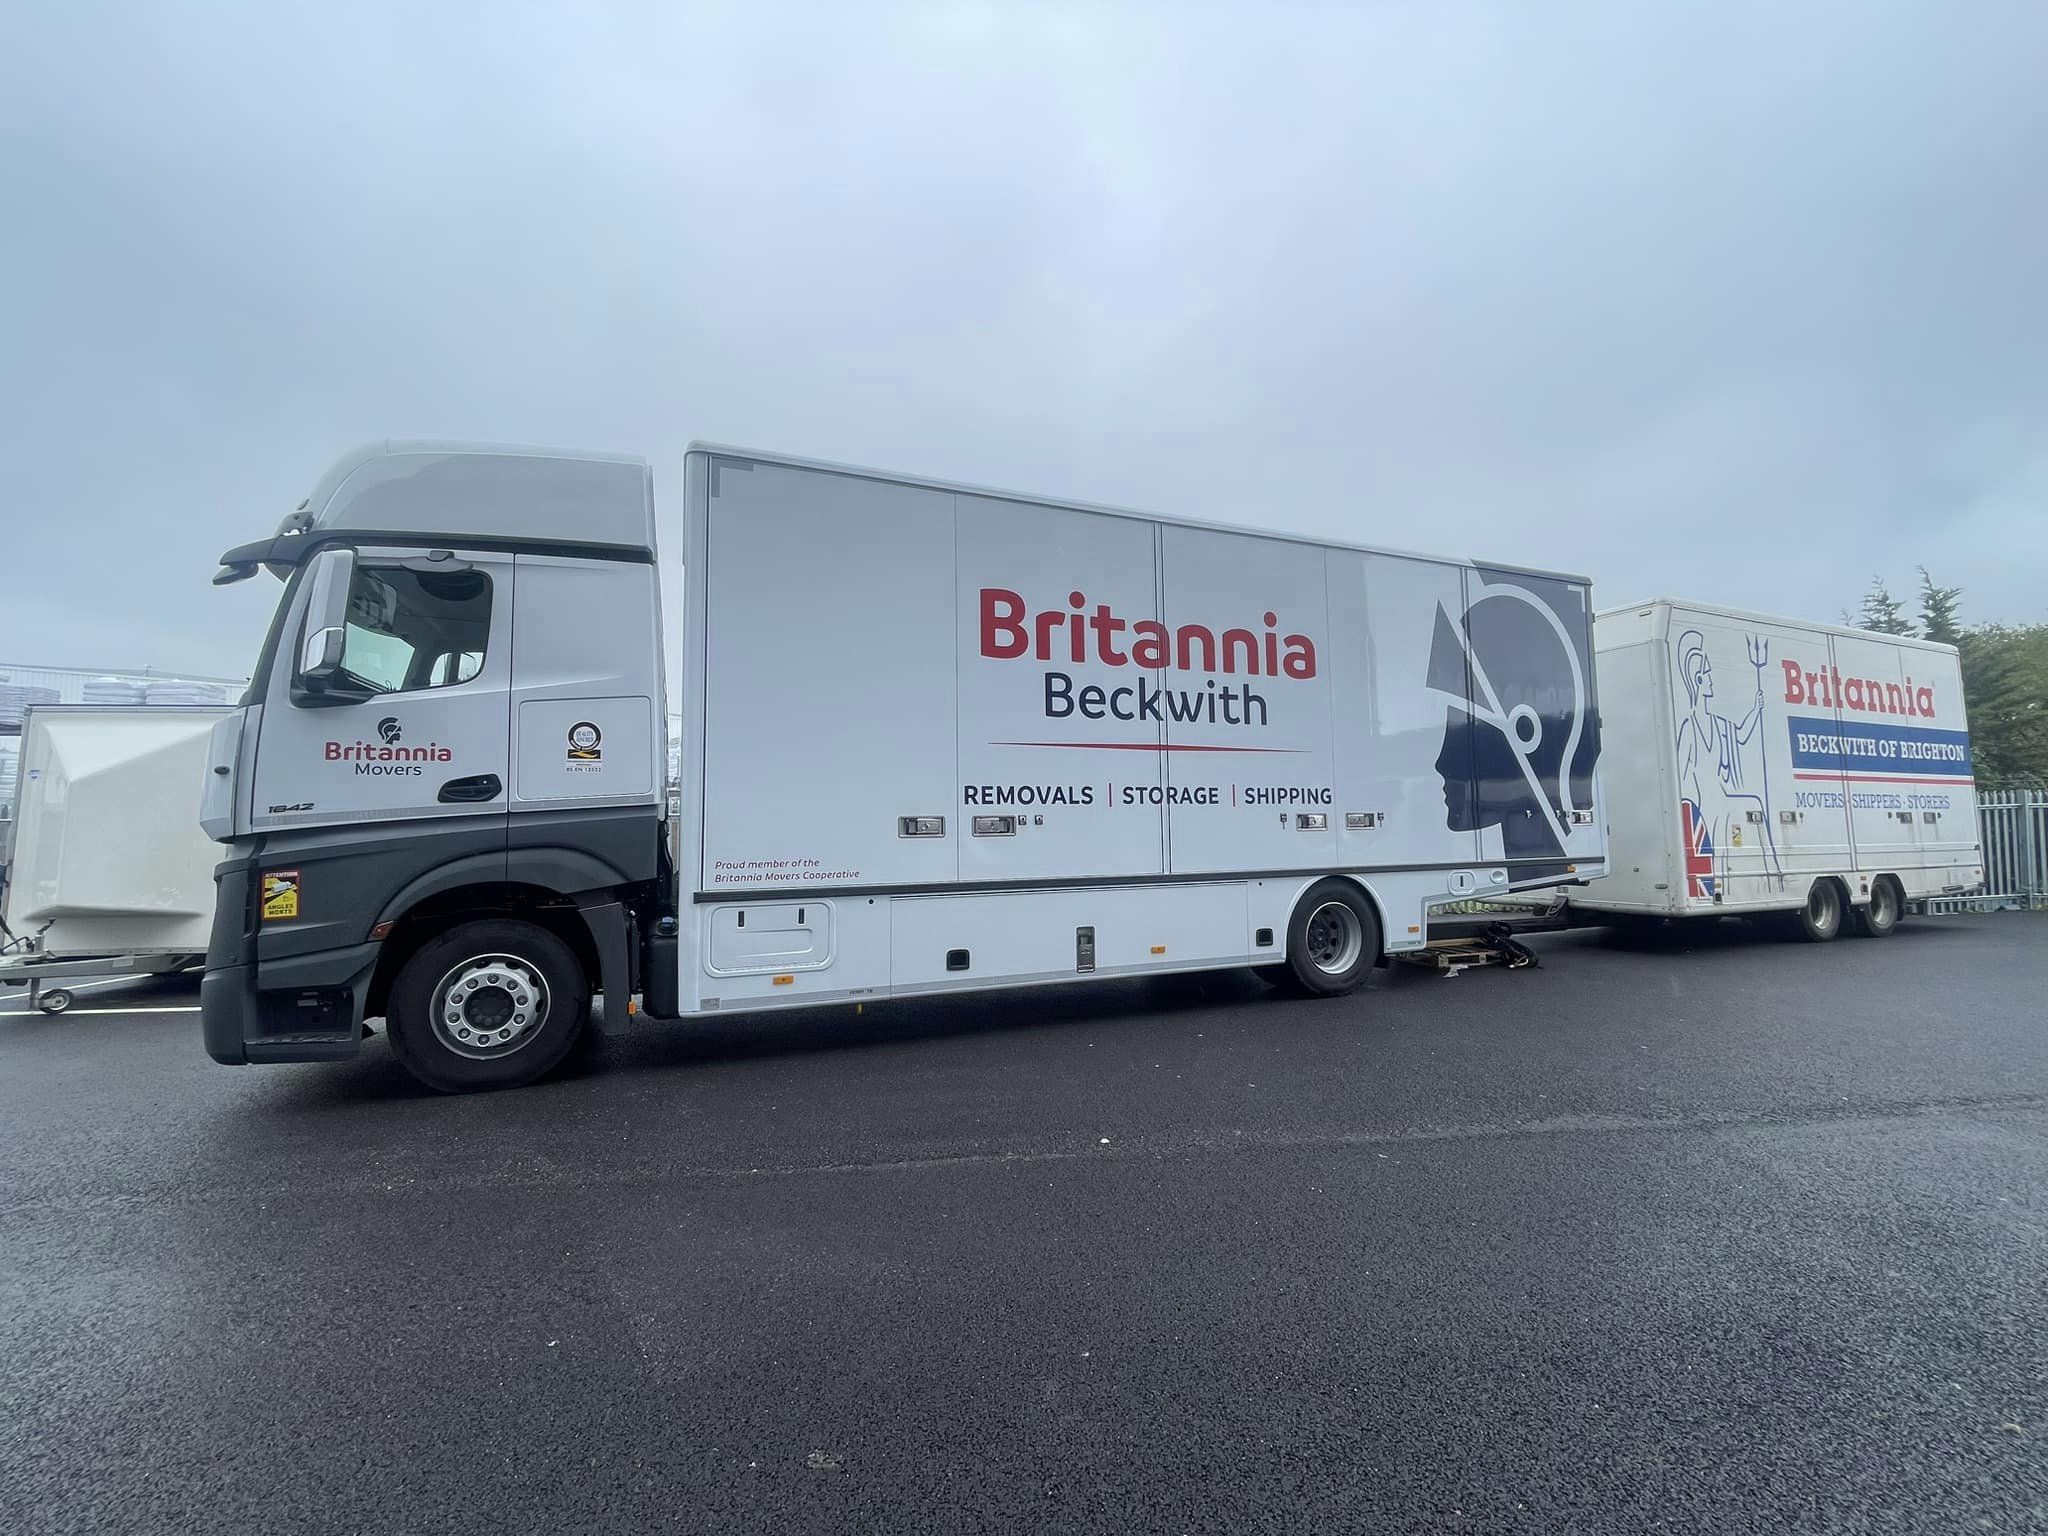 Main photo for Britannia Beckwith